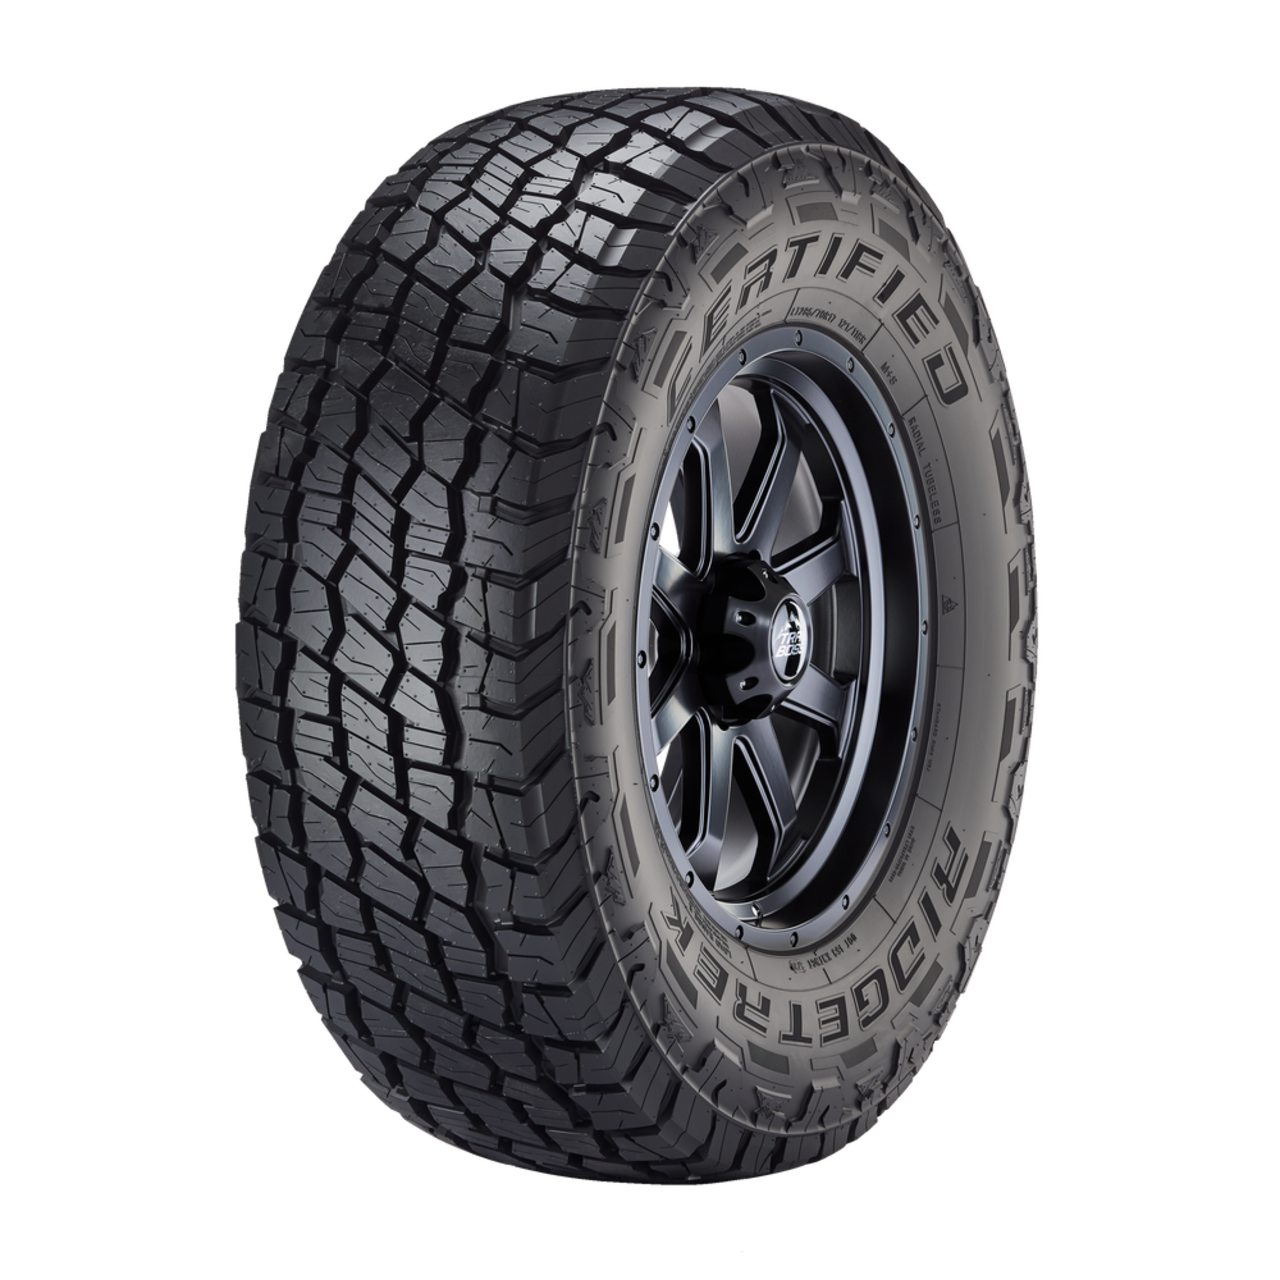 certified ridge trek tires review